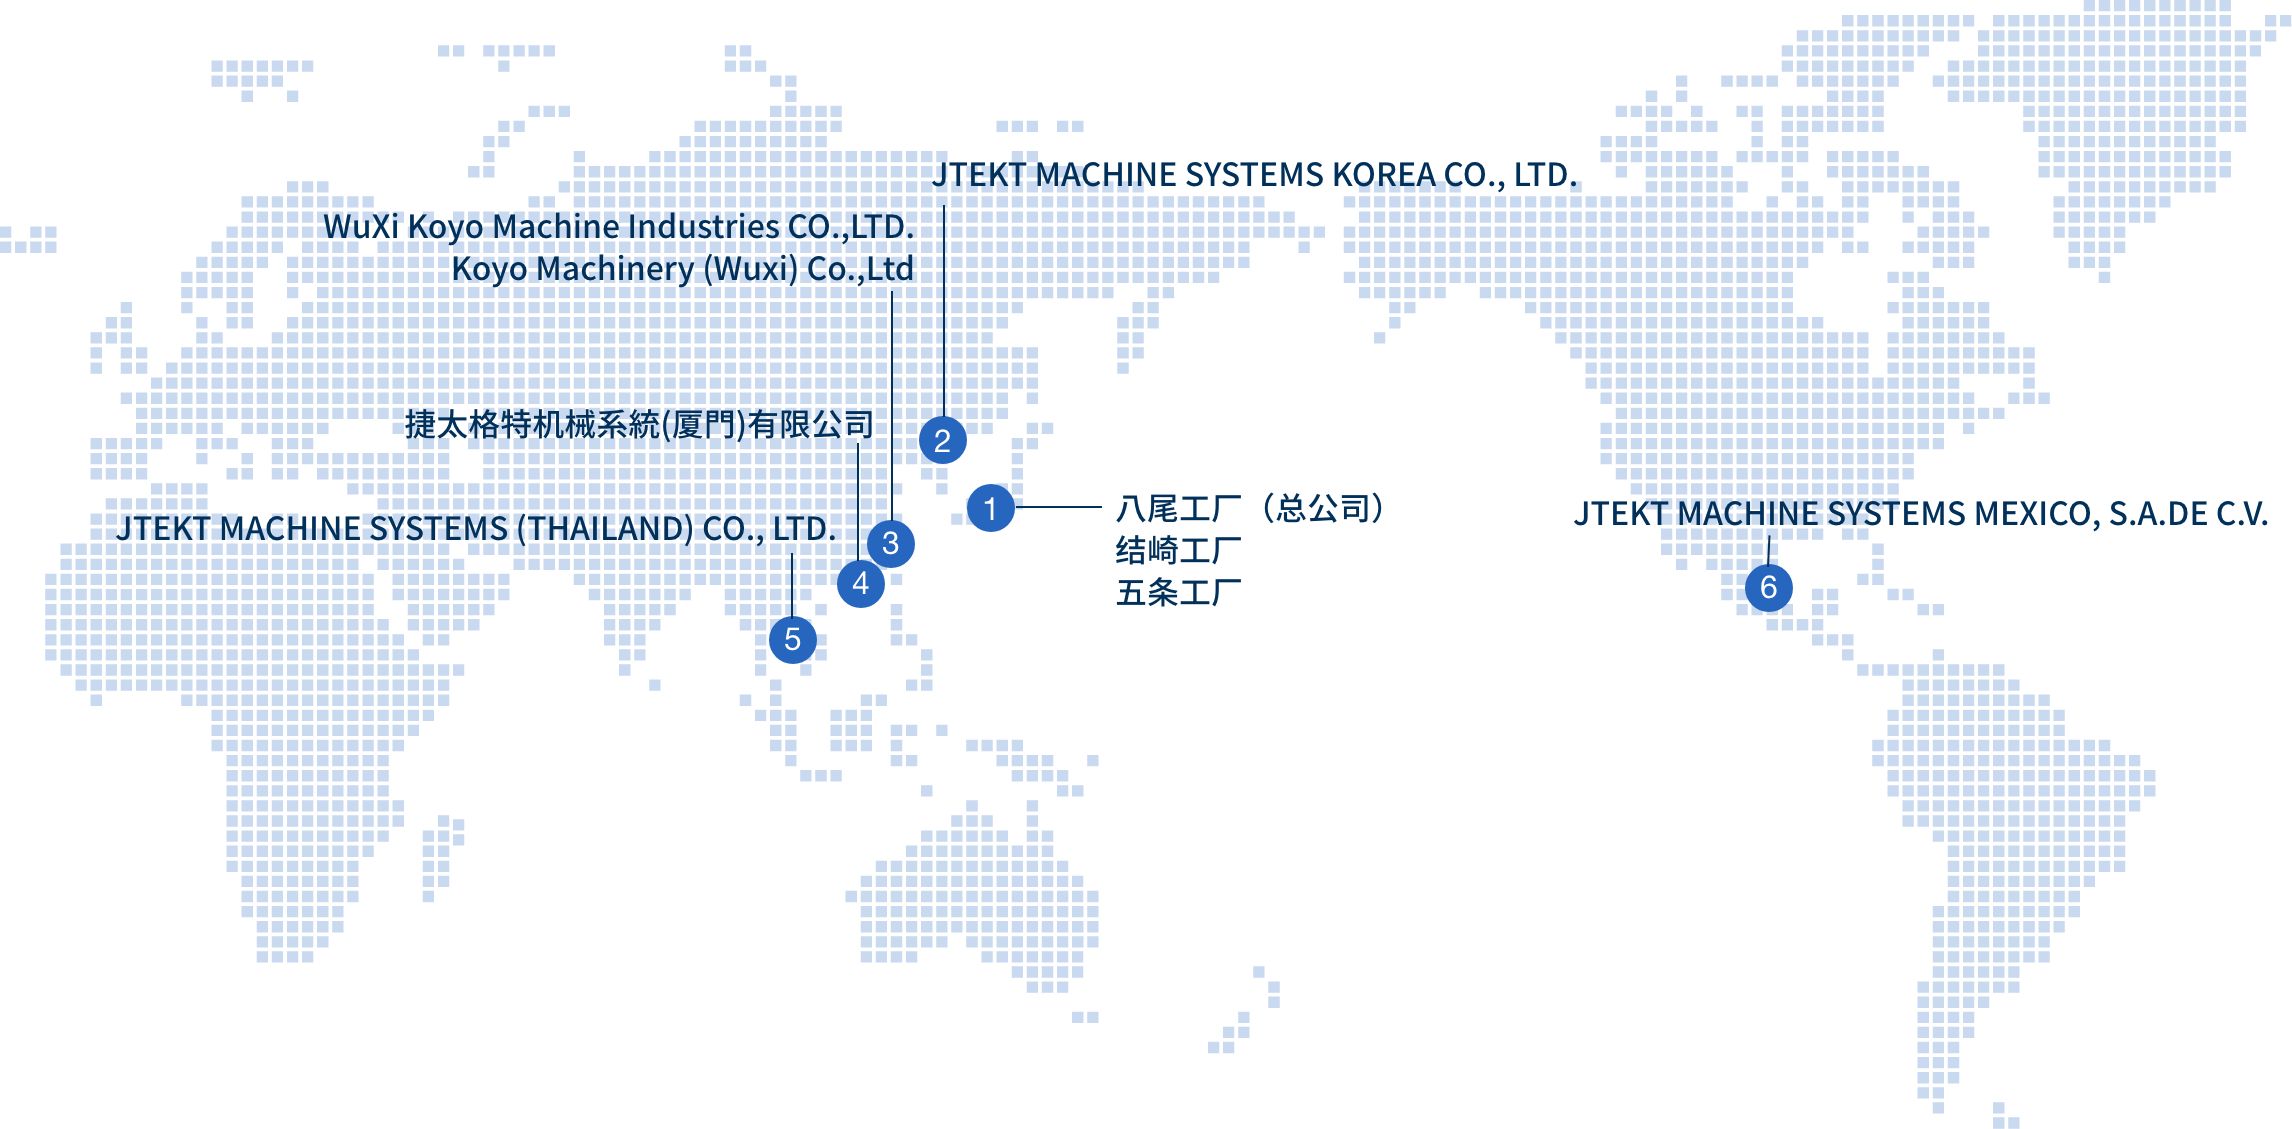 KOYO MACHINE INDUSTRIES CO.,LTD. 生产基地/关联公司